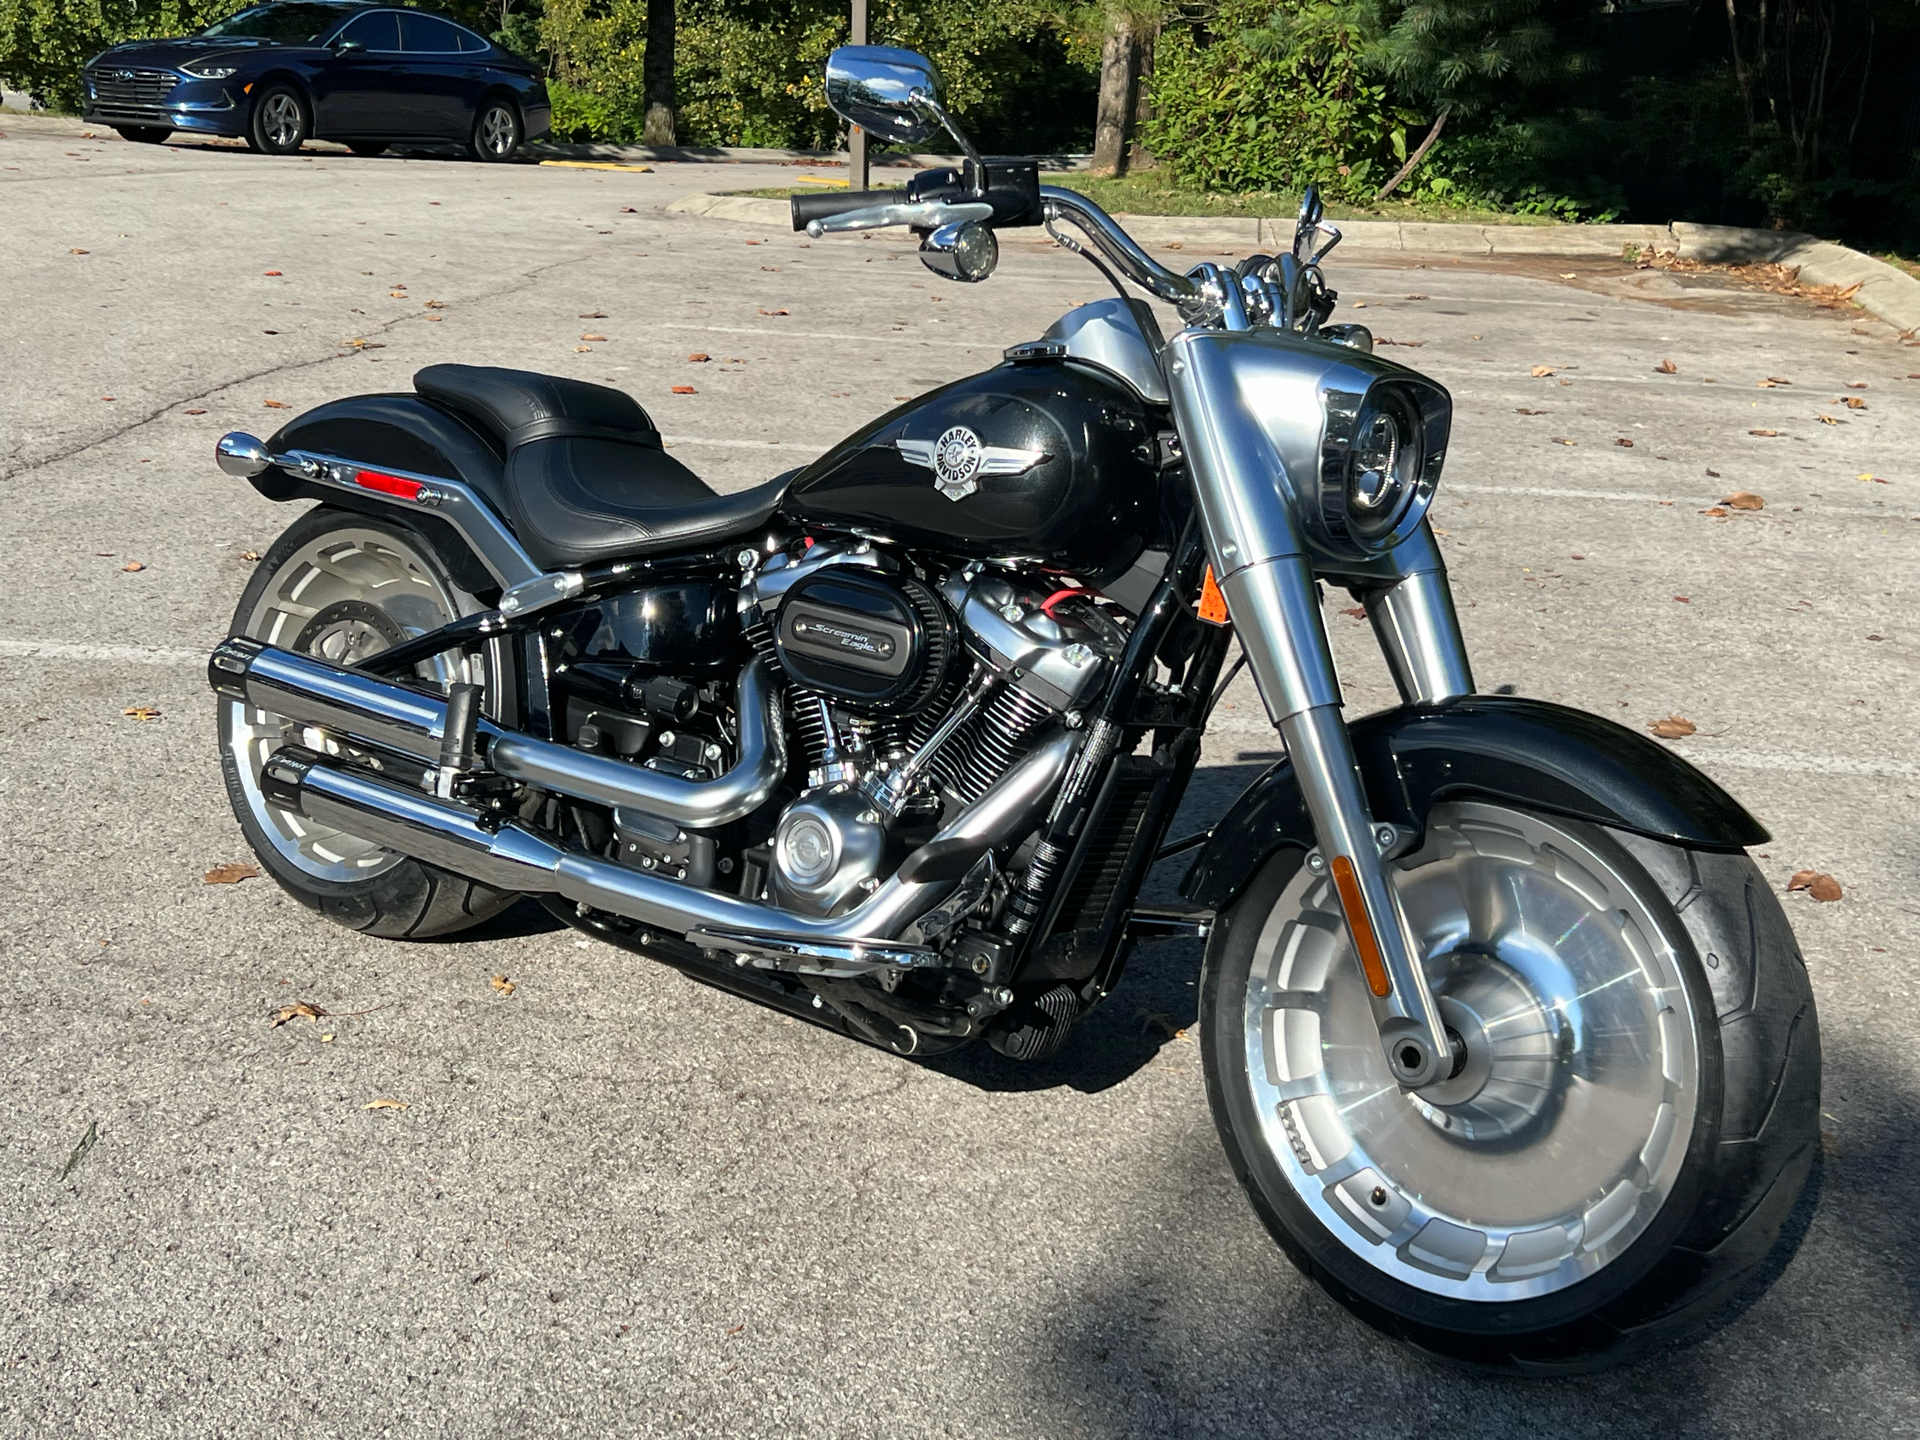 2018 Harley-Davidson Fat Boy® 114 in Franklin, Tennessee - Photo 5